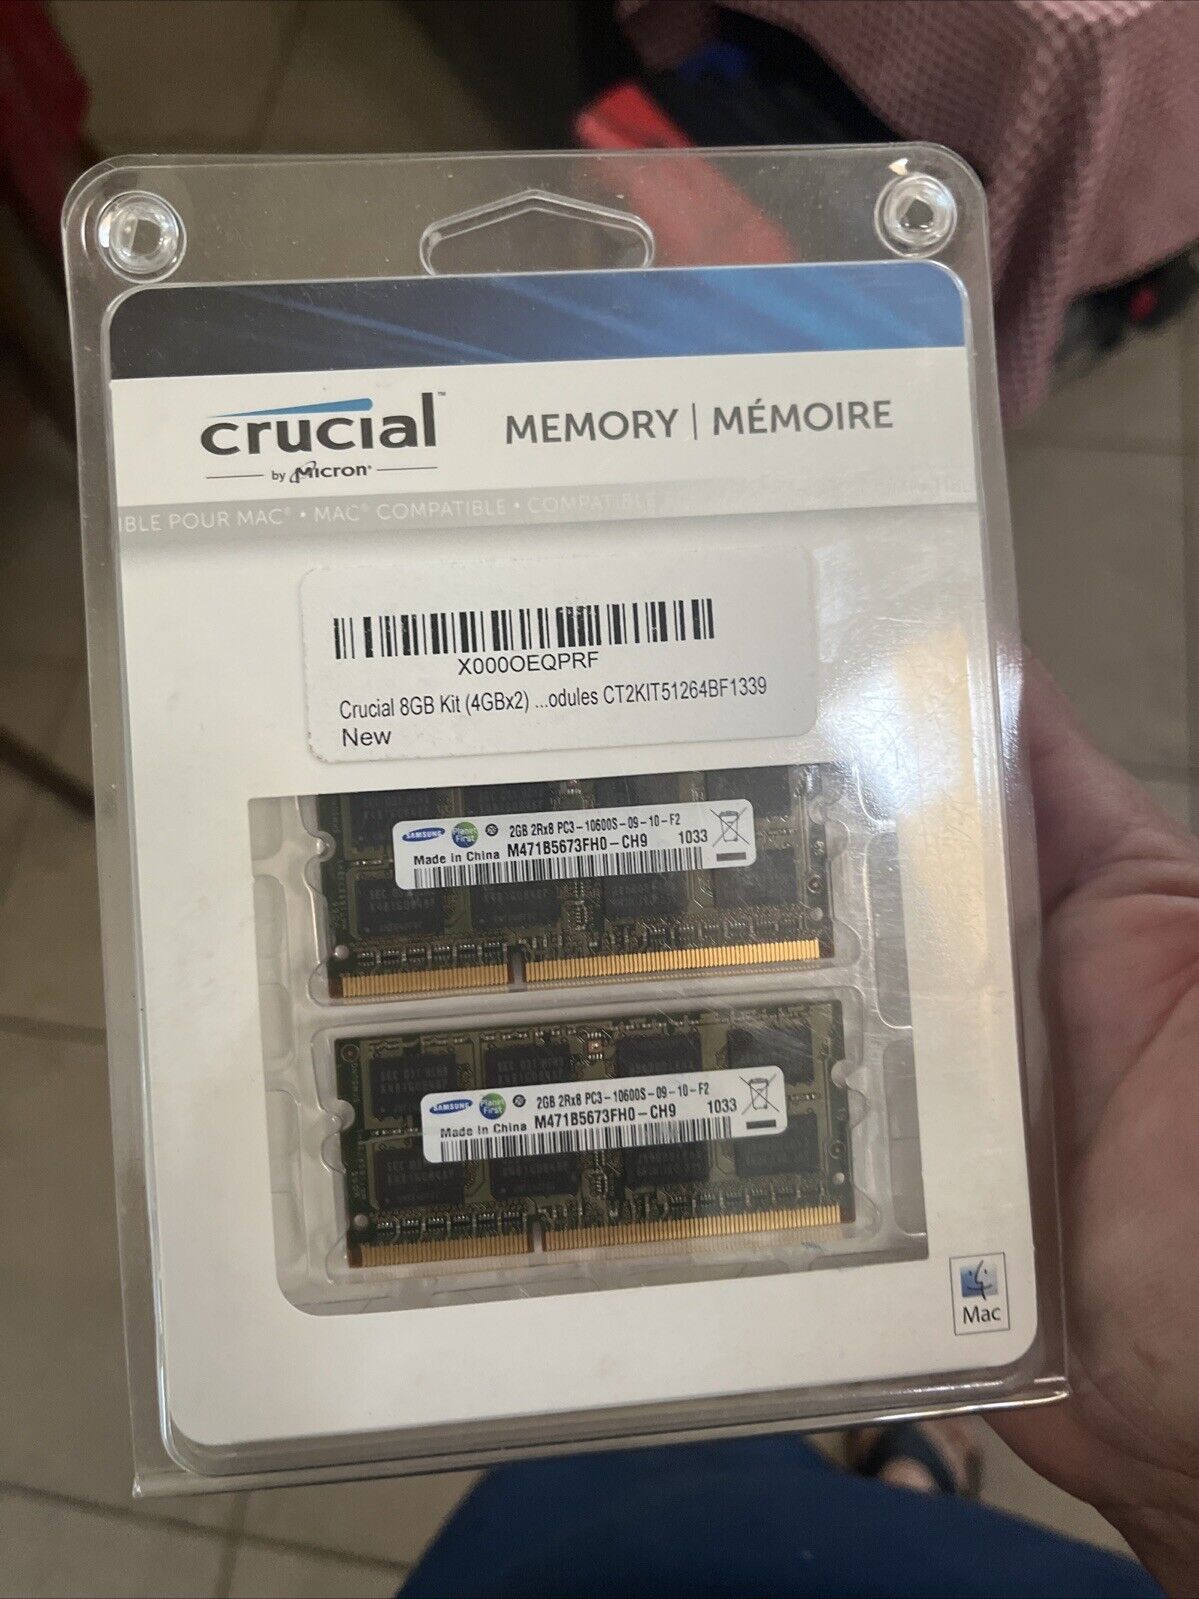 NIB Crucial by Micron Apple Mac Compatible Memory 8 GB (4GB x 2) Kit 